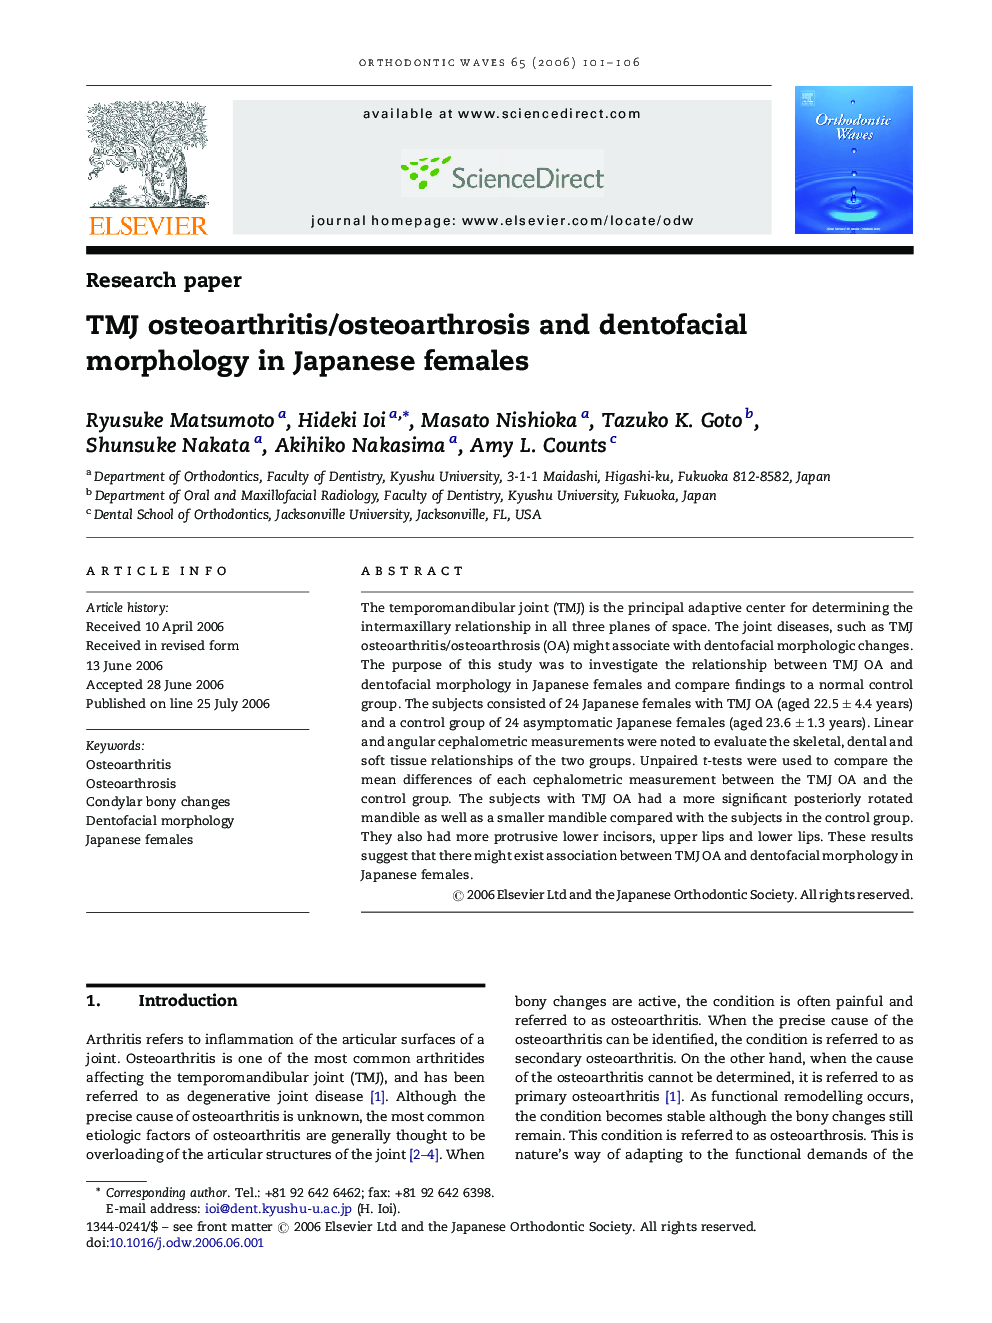 TMJ osteoarthritis/osteoarthrosis and dentofacial morphology in Japanese females